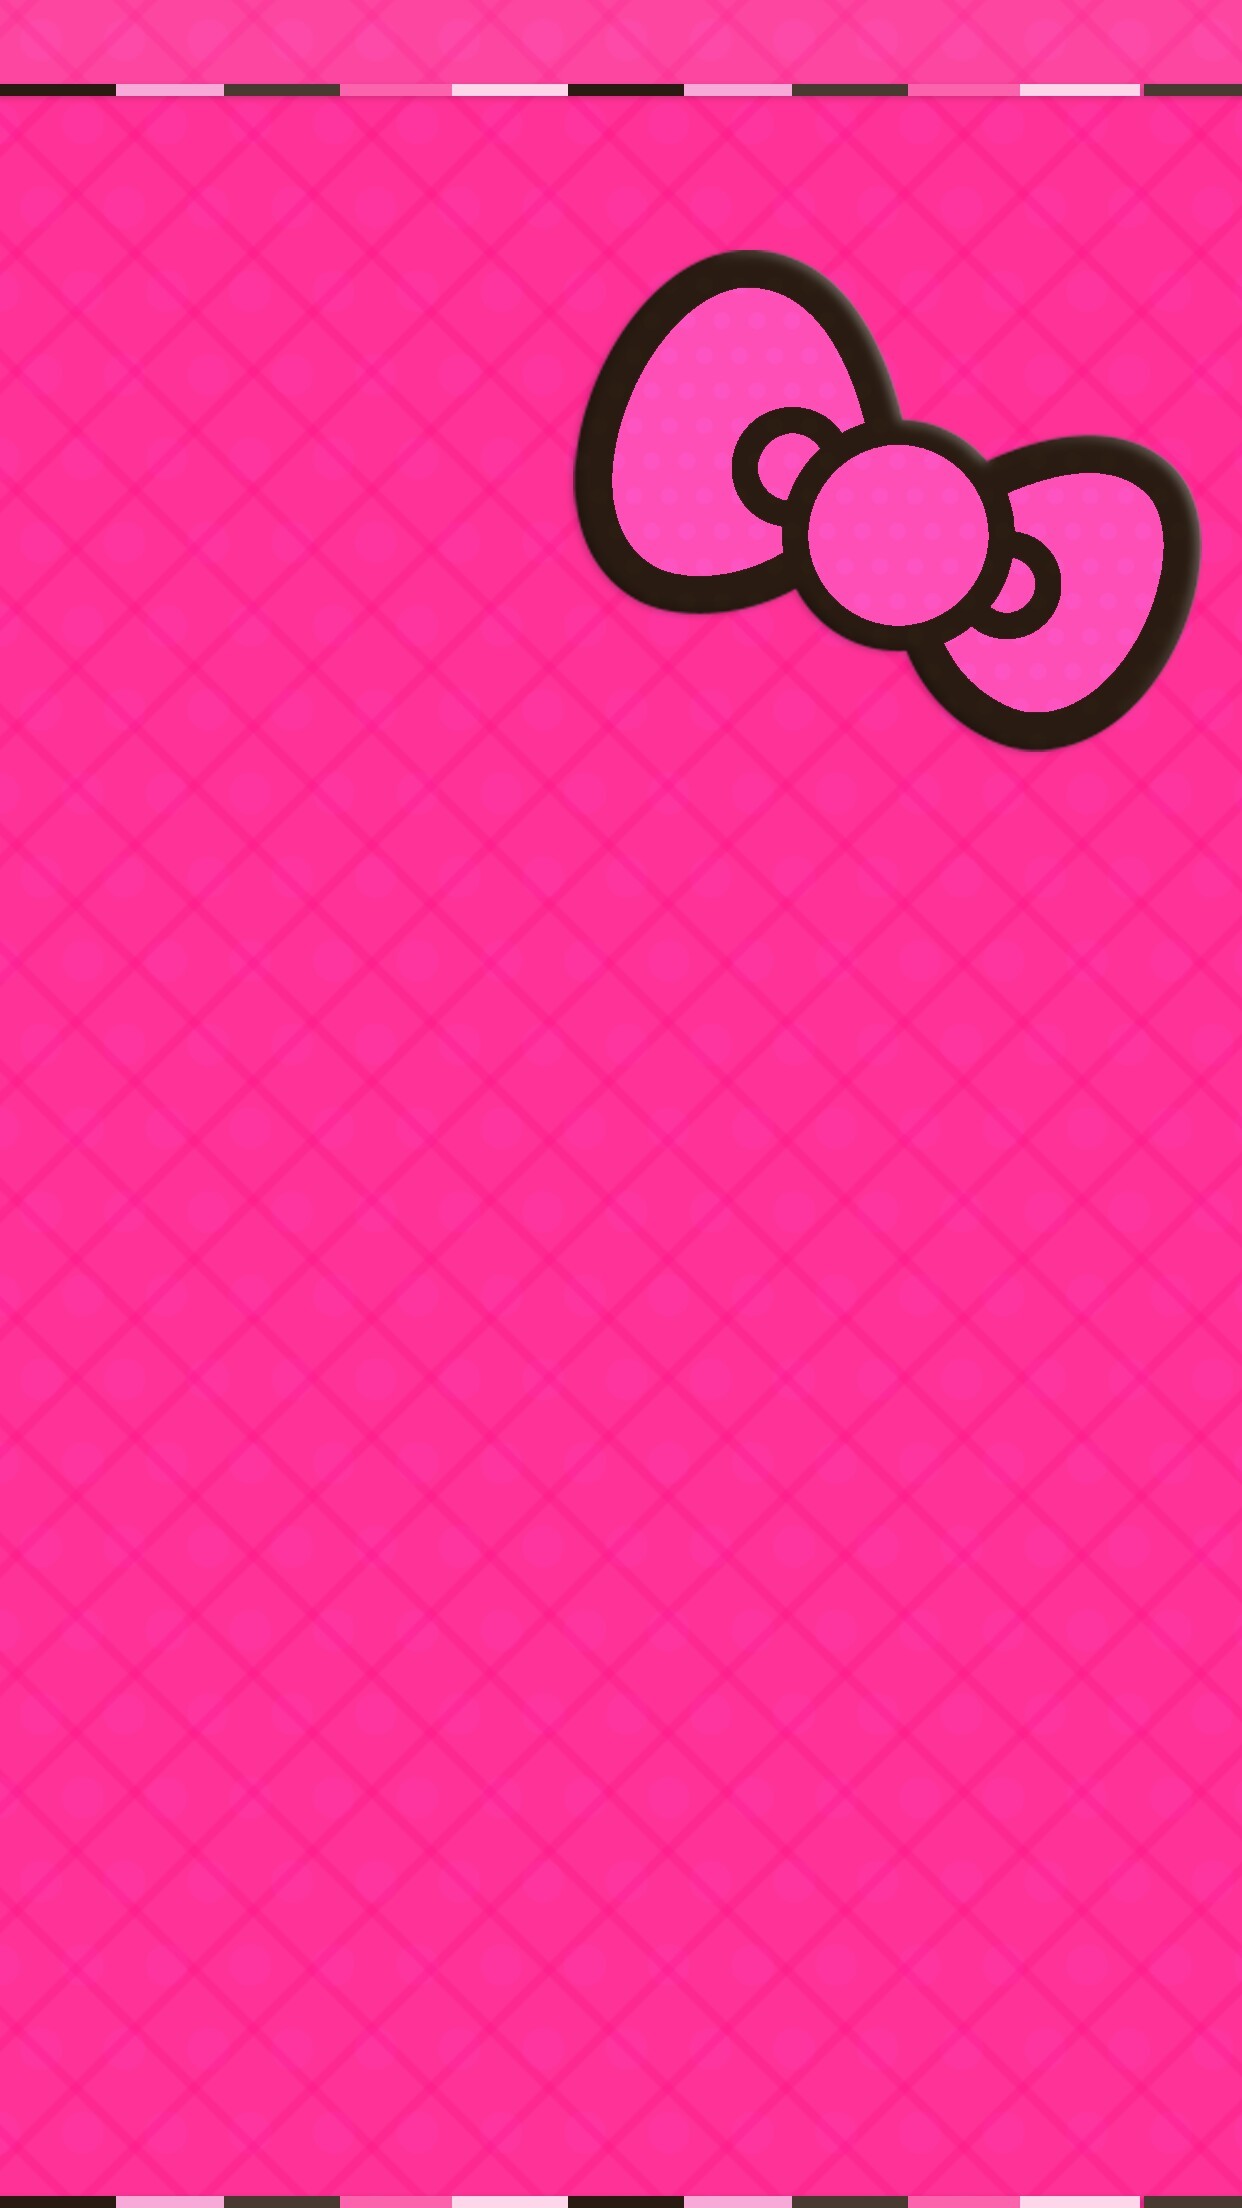 1242x2208 Hello Kitty Wallpaper, Pink Wallpaper, Iphone Wallpaper, Iphone 6, Ipod,  Notebook, Walls, Iphone Funds, Paper